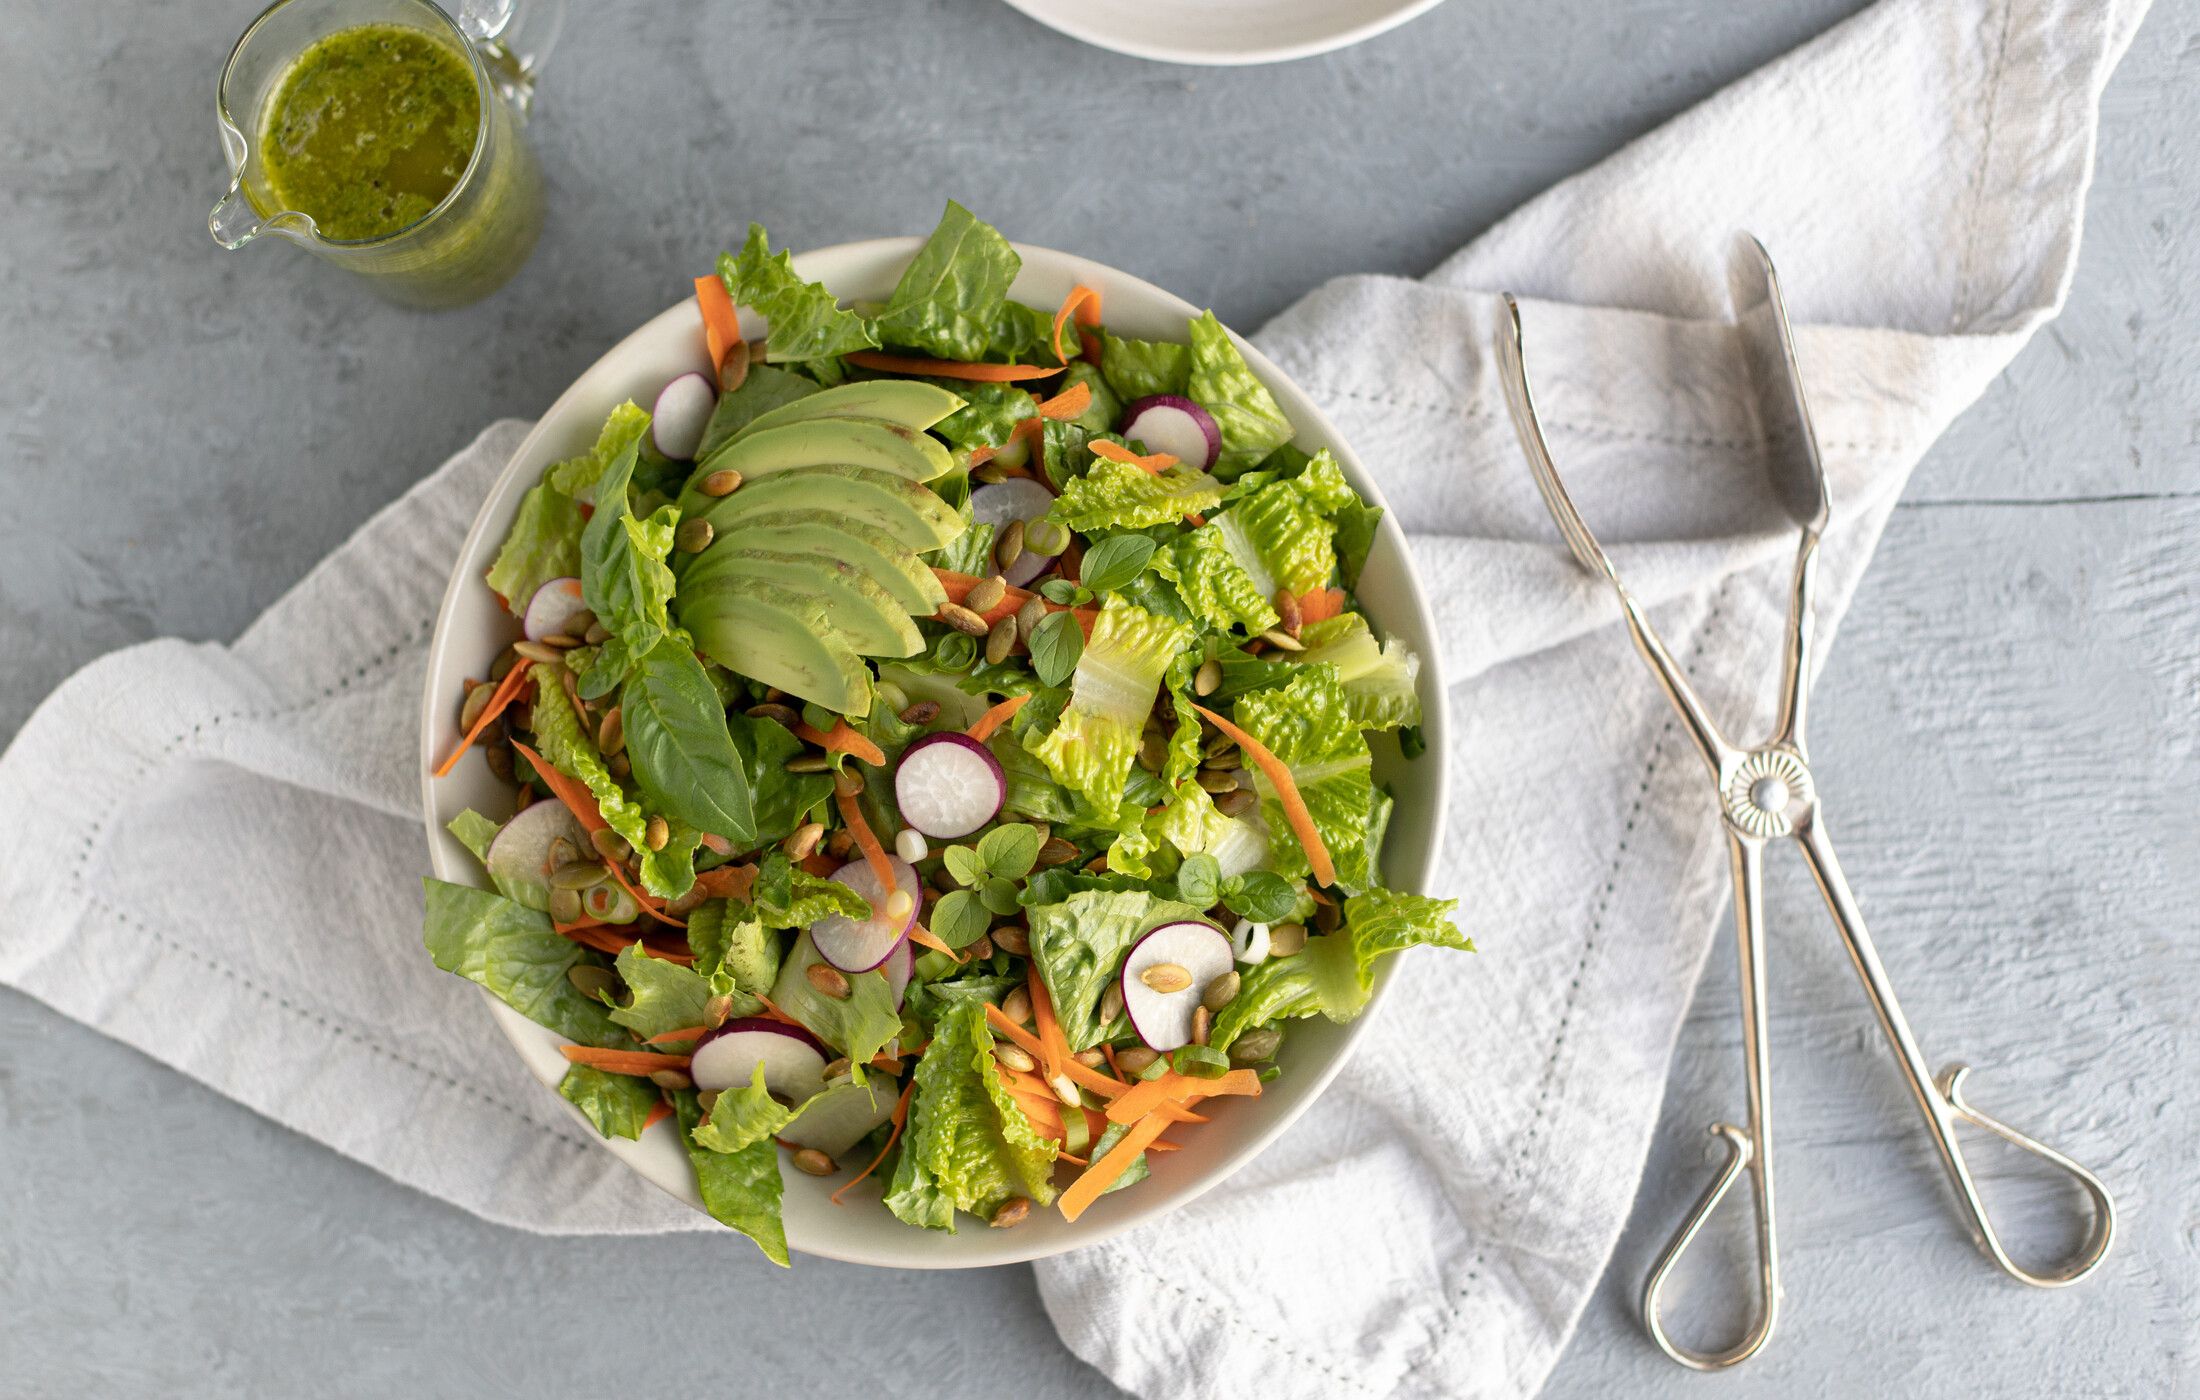 Crunchy Romaine Salad with Italian Herb Dressing